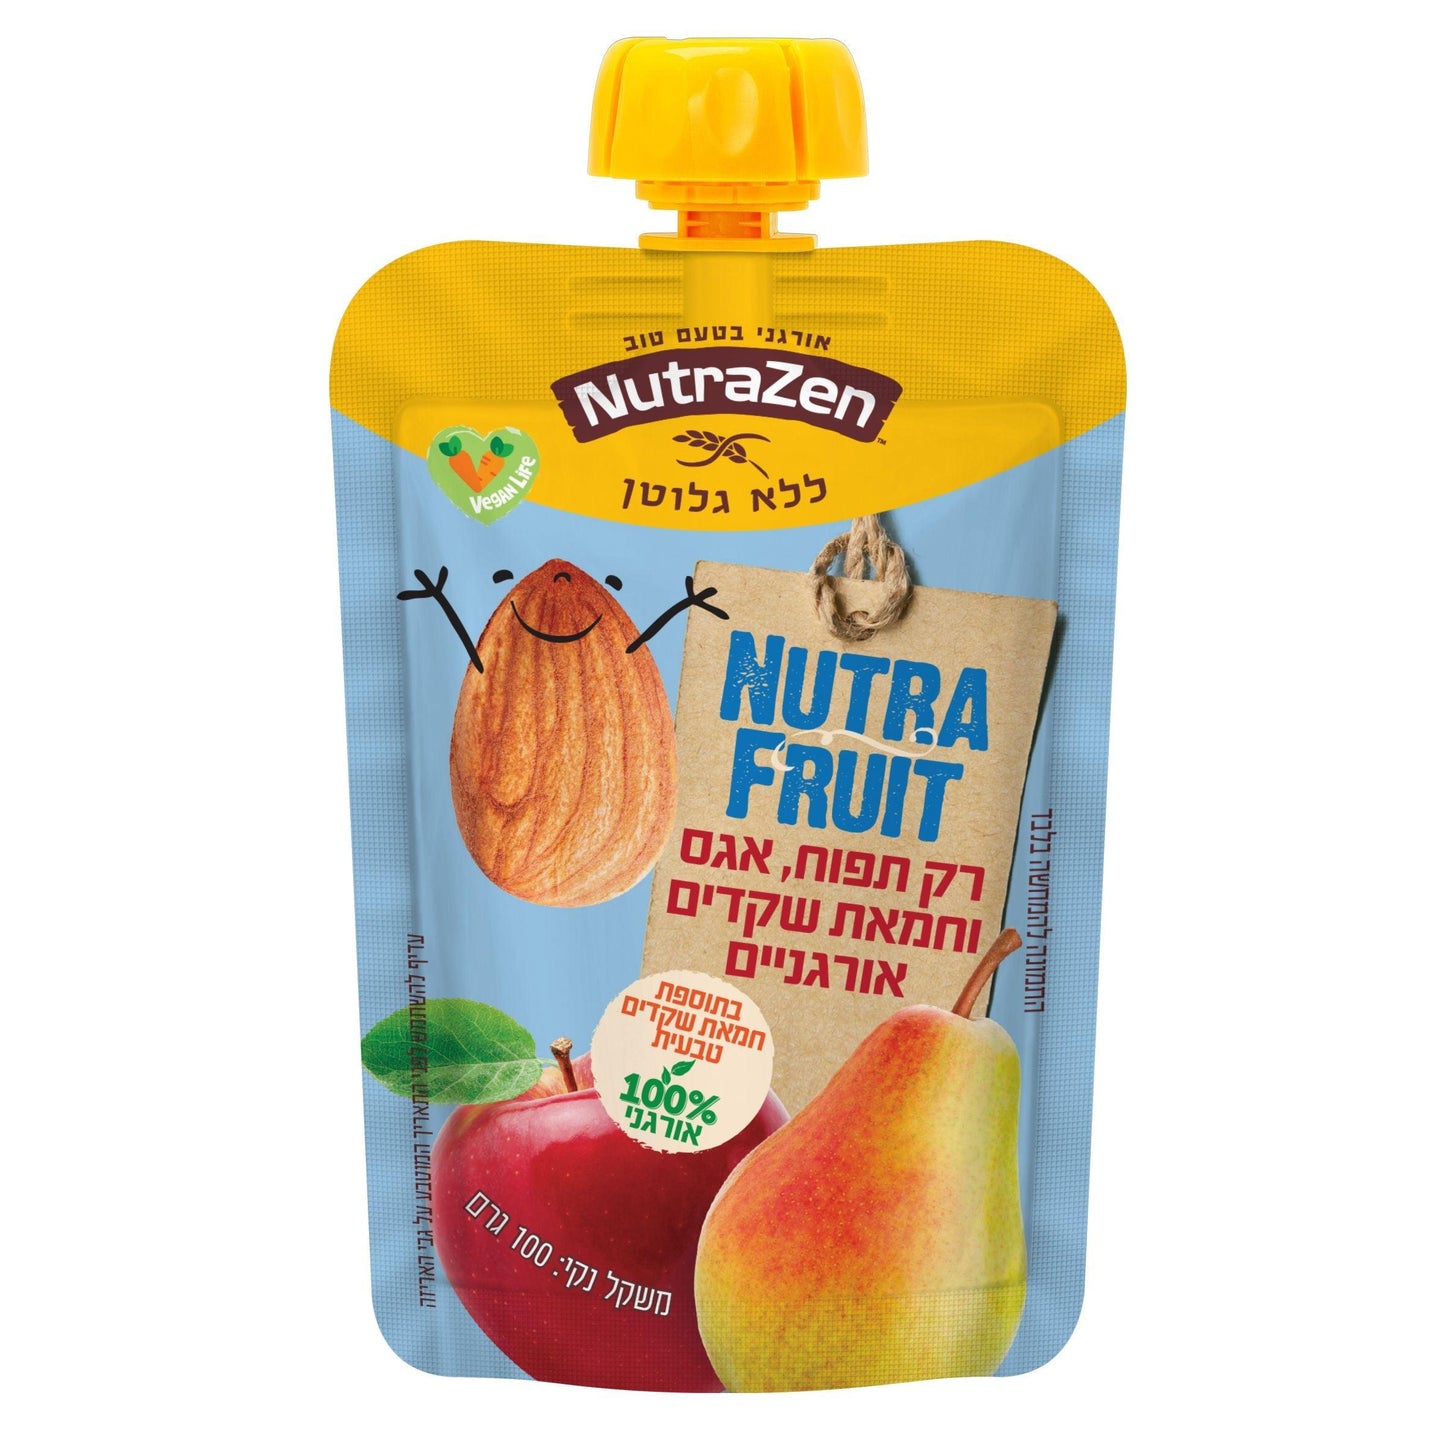 Nutra Fruit - מחית אורגנית תפוחי עץ, אגס וחמאת שקדים | נוטרה זן - 6 יחידות - NutraZen - פריקפוא